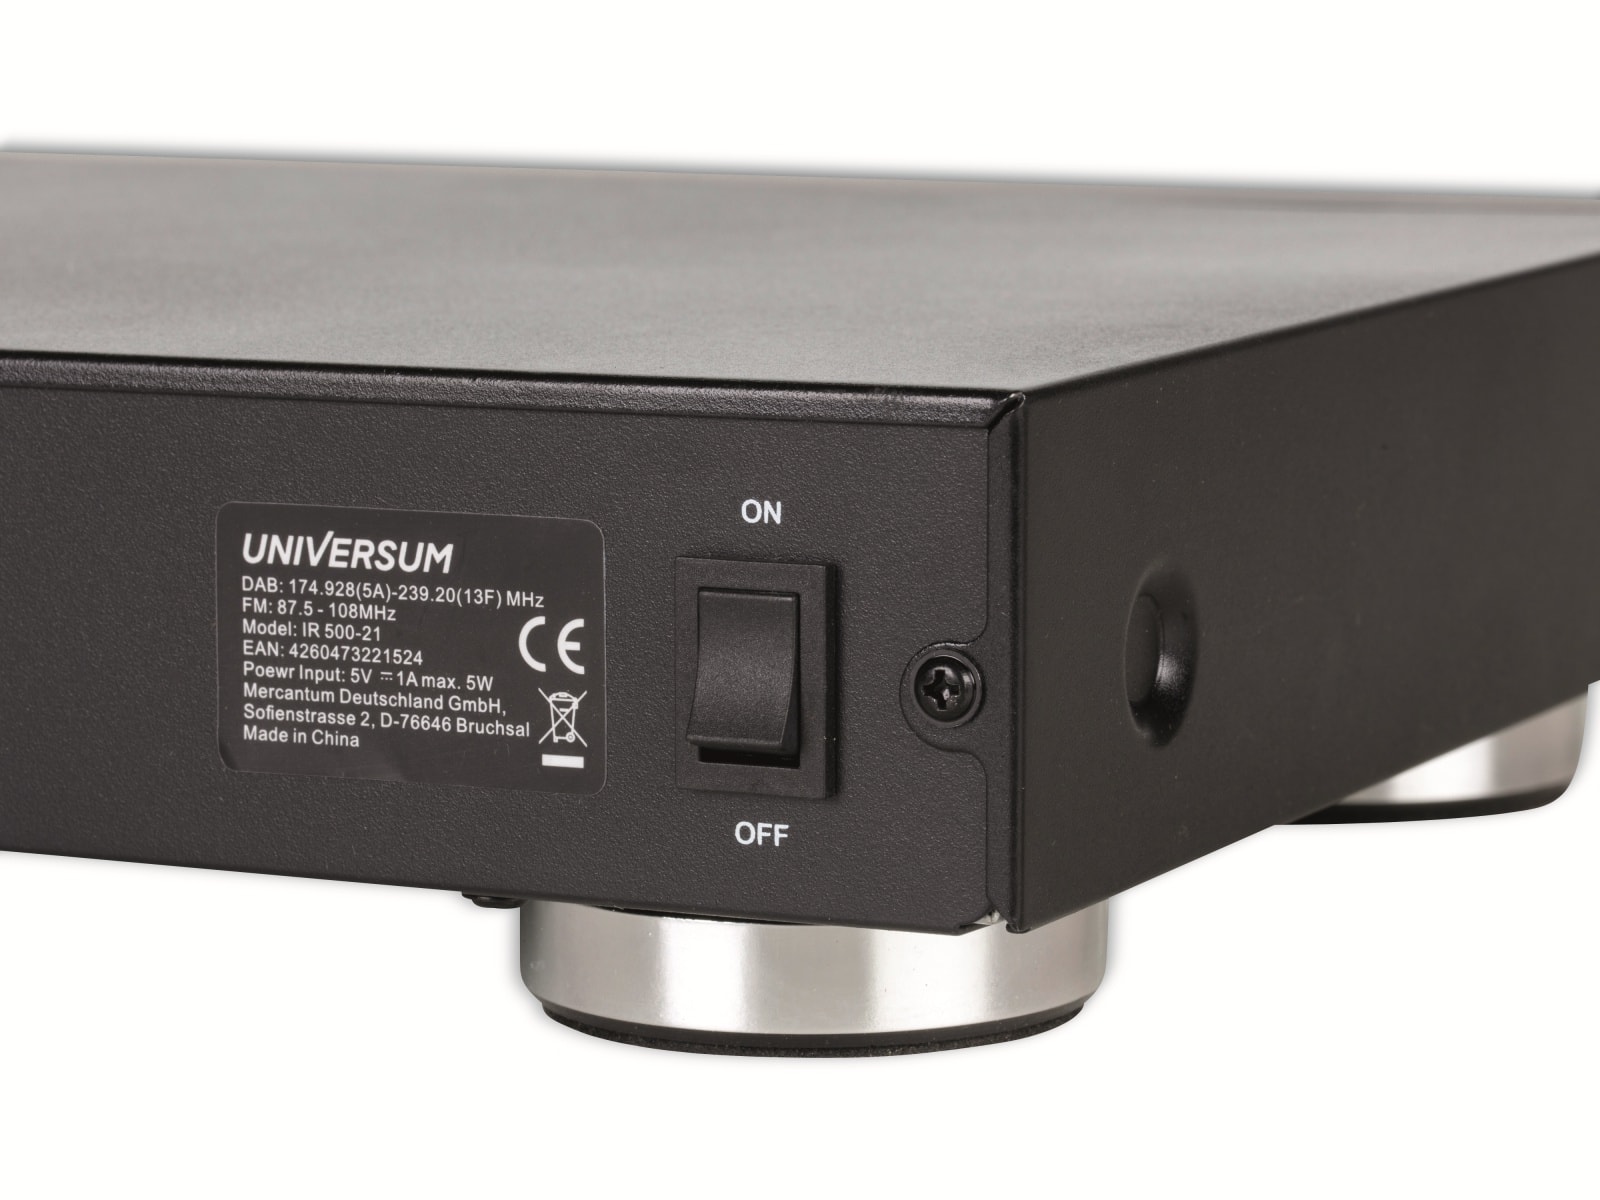 UNIVERSUM Internetradio IR 500-21, DAB+/FM, WiFi, Bluetooth, schwarz